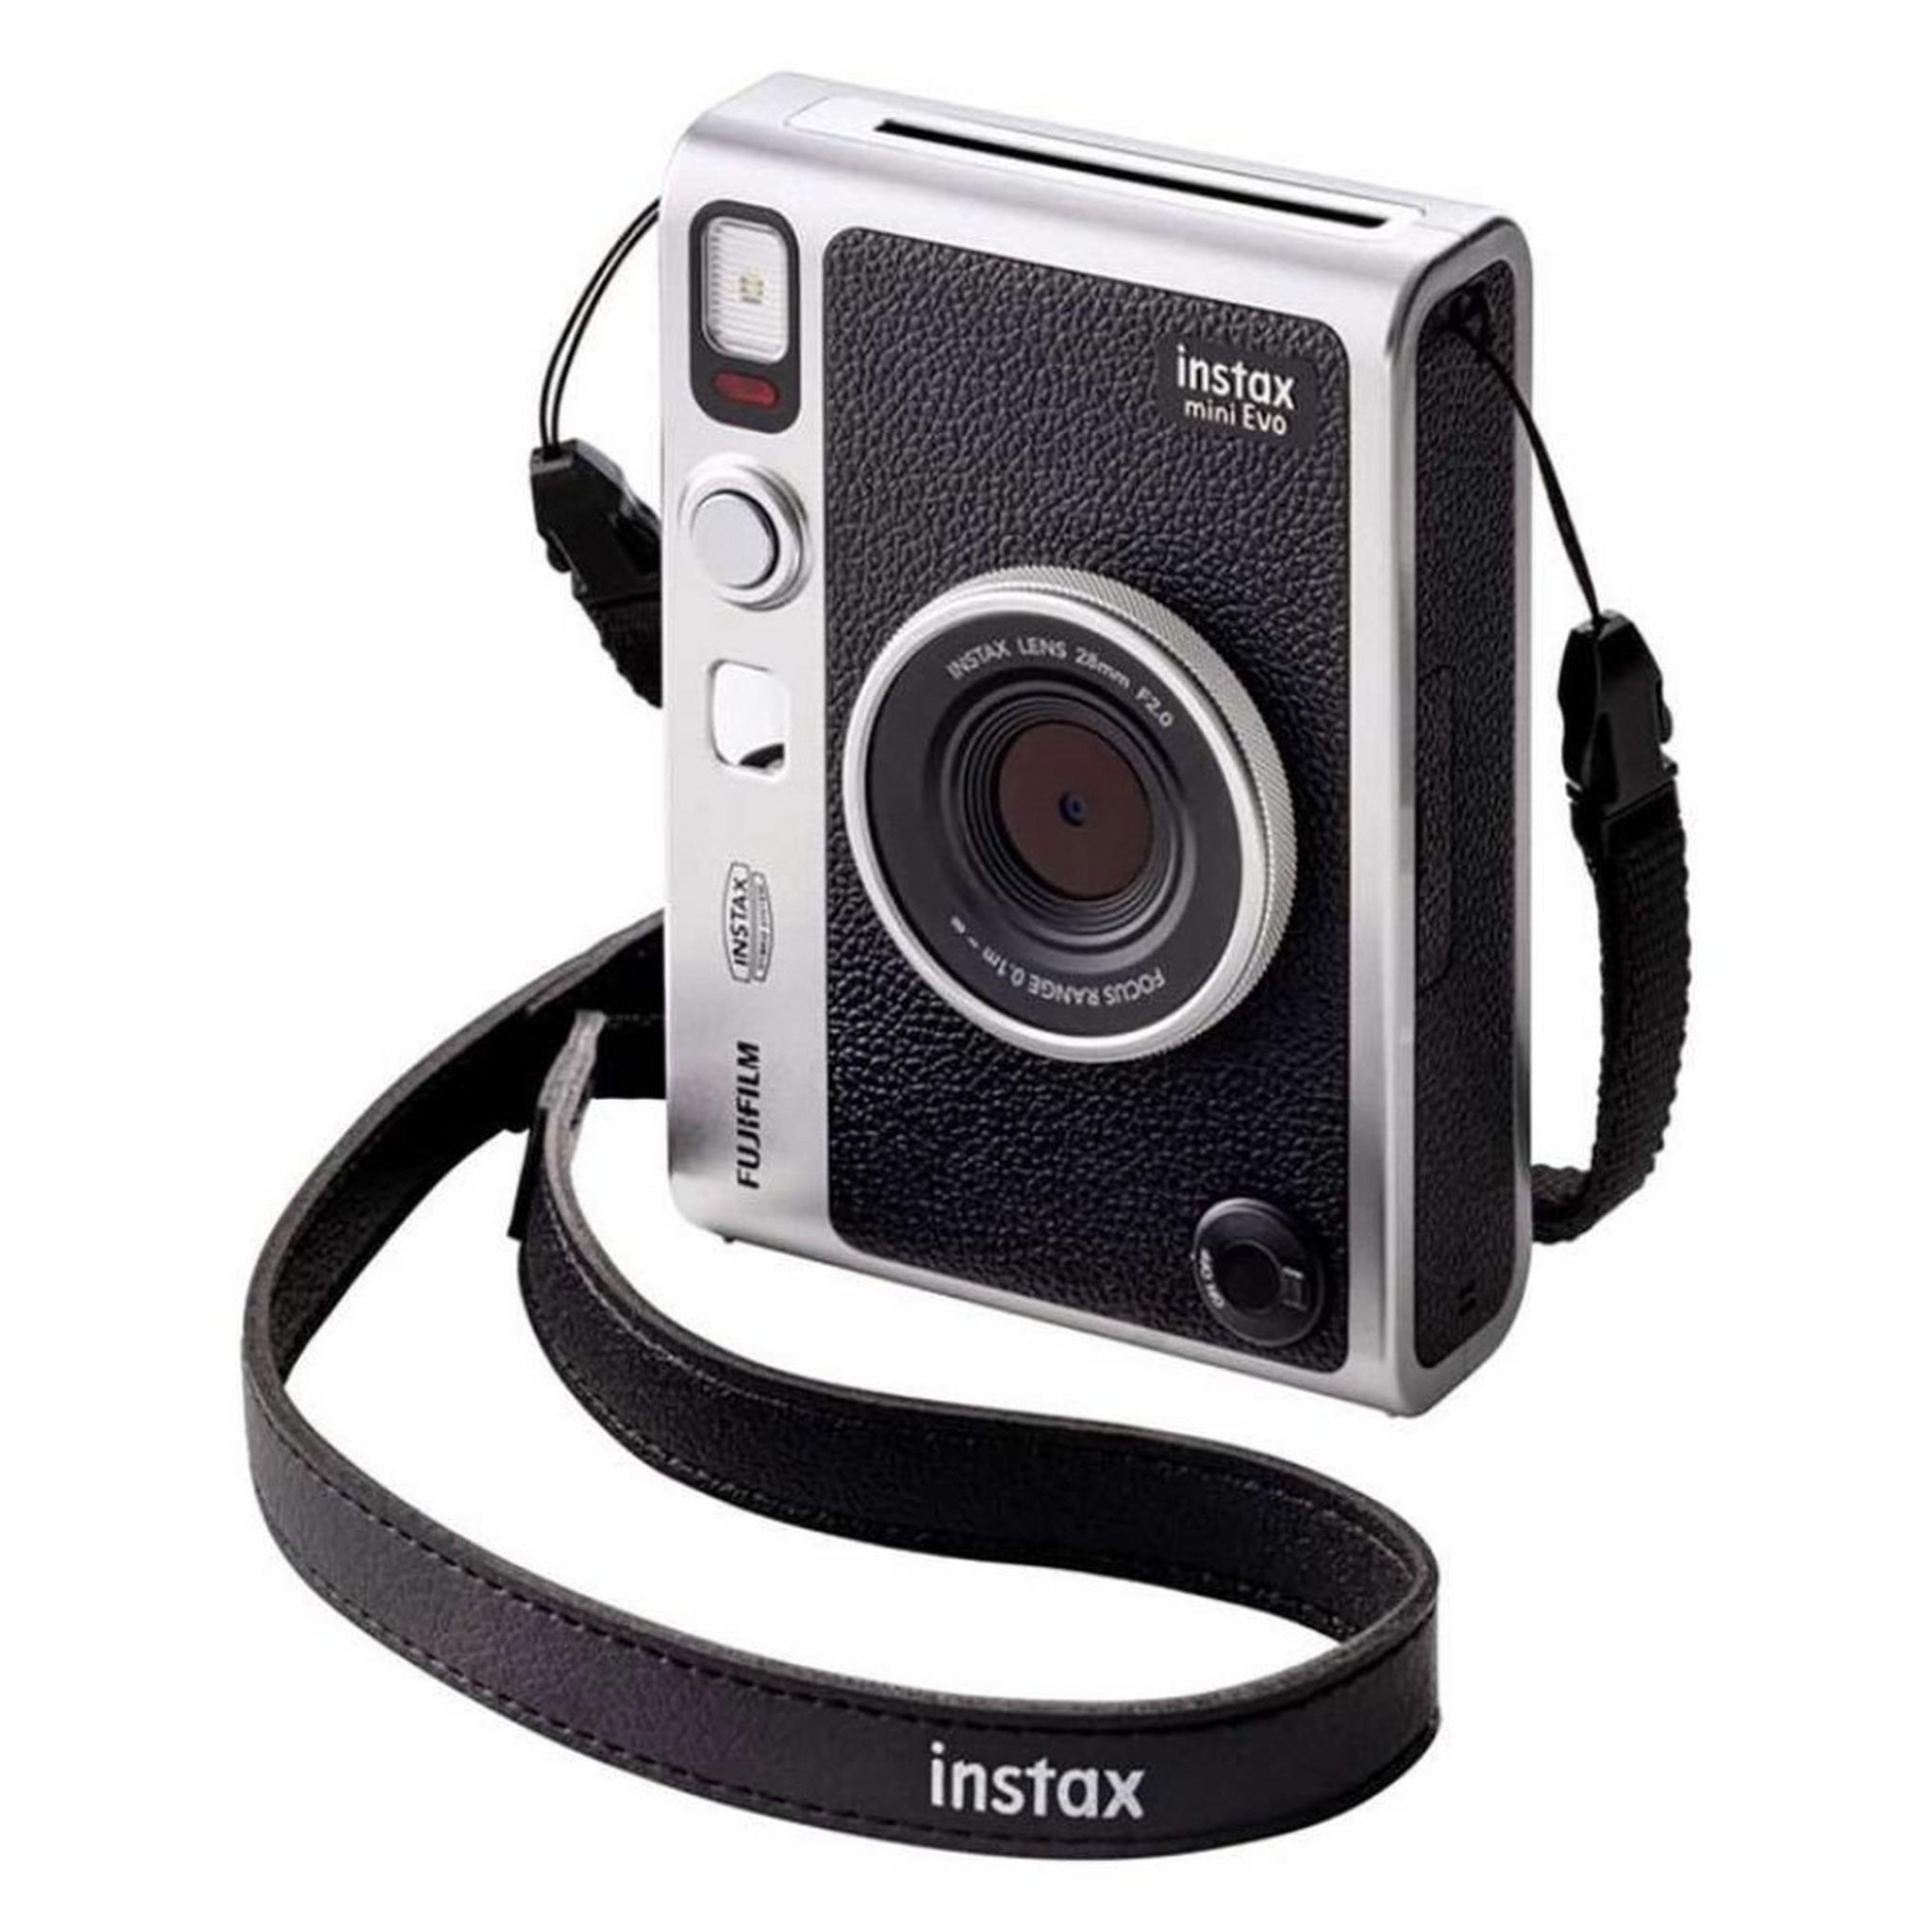 Fuji Instax Mini Evo Camera Black